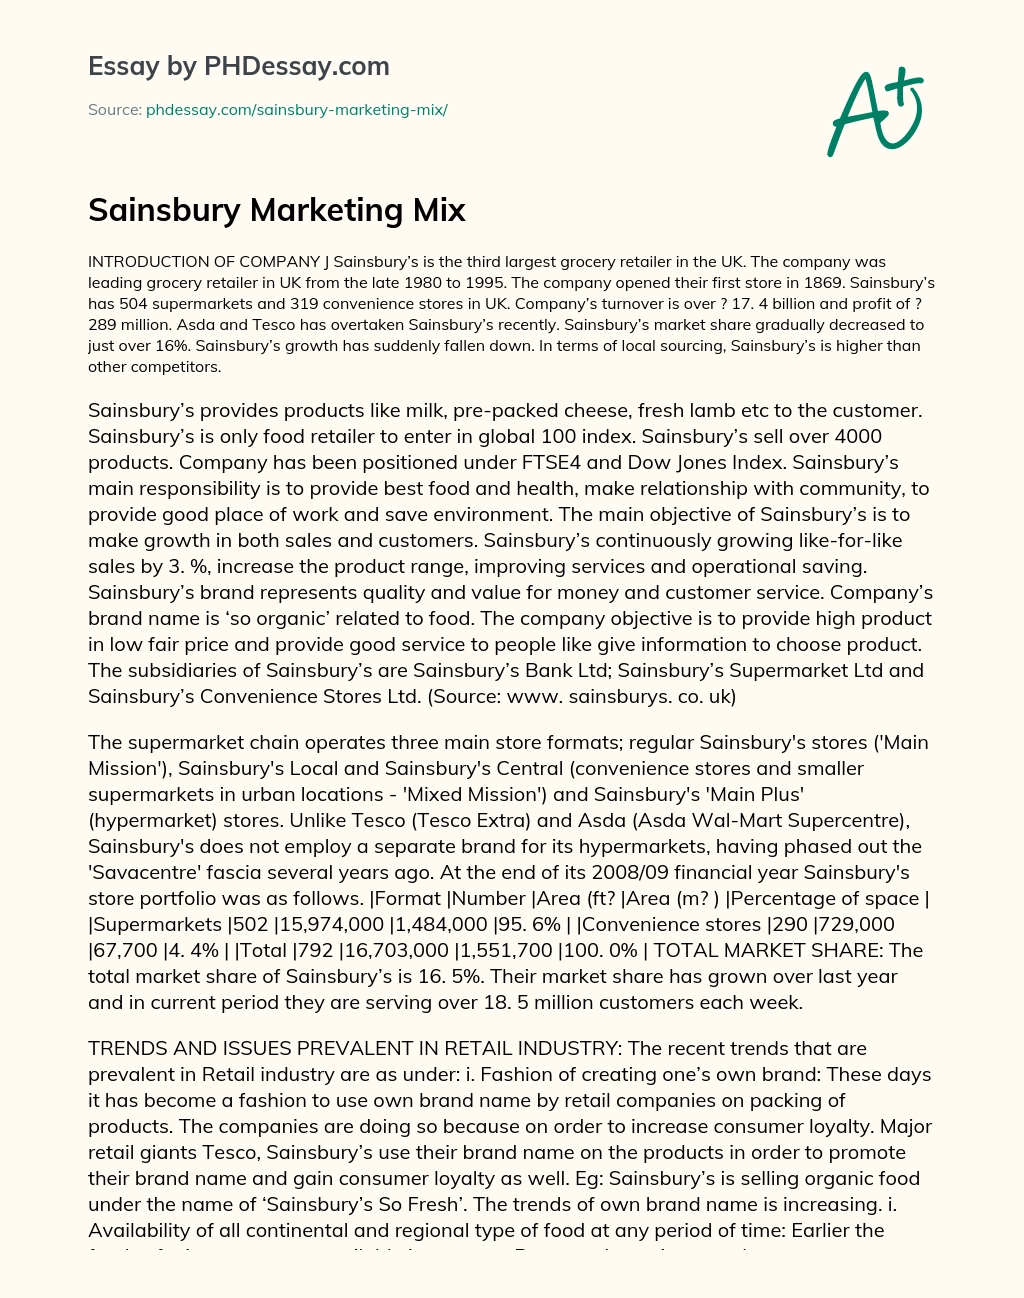 Sainsbury Marketing Mix essay